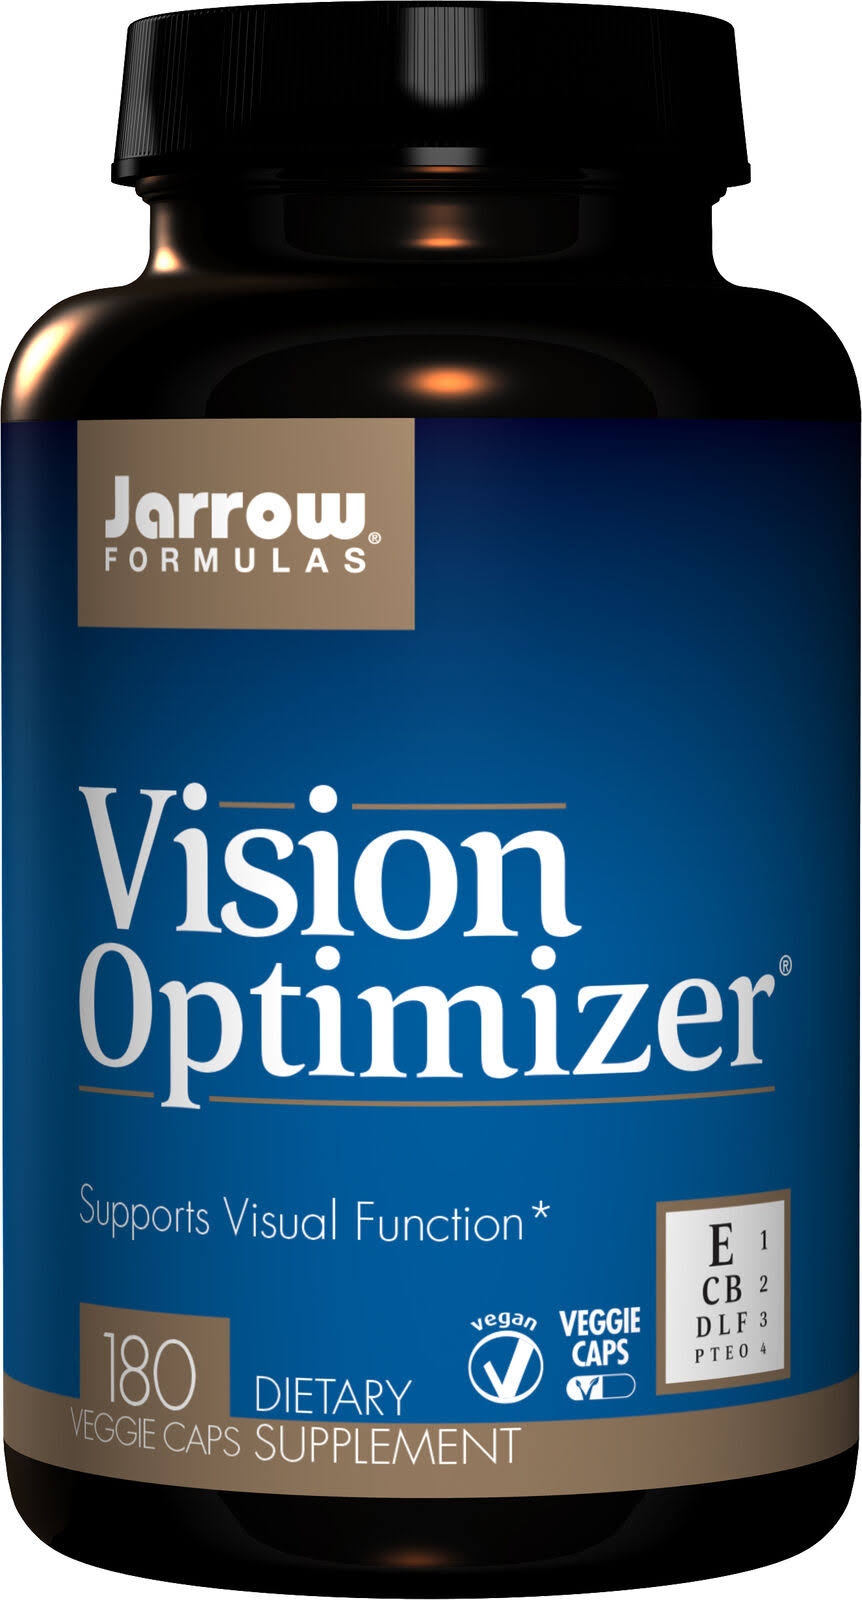 Jarrow Formulas Vision Optimizer Dietary Supplement - 180ct